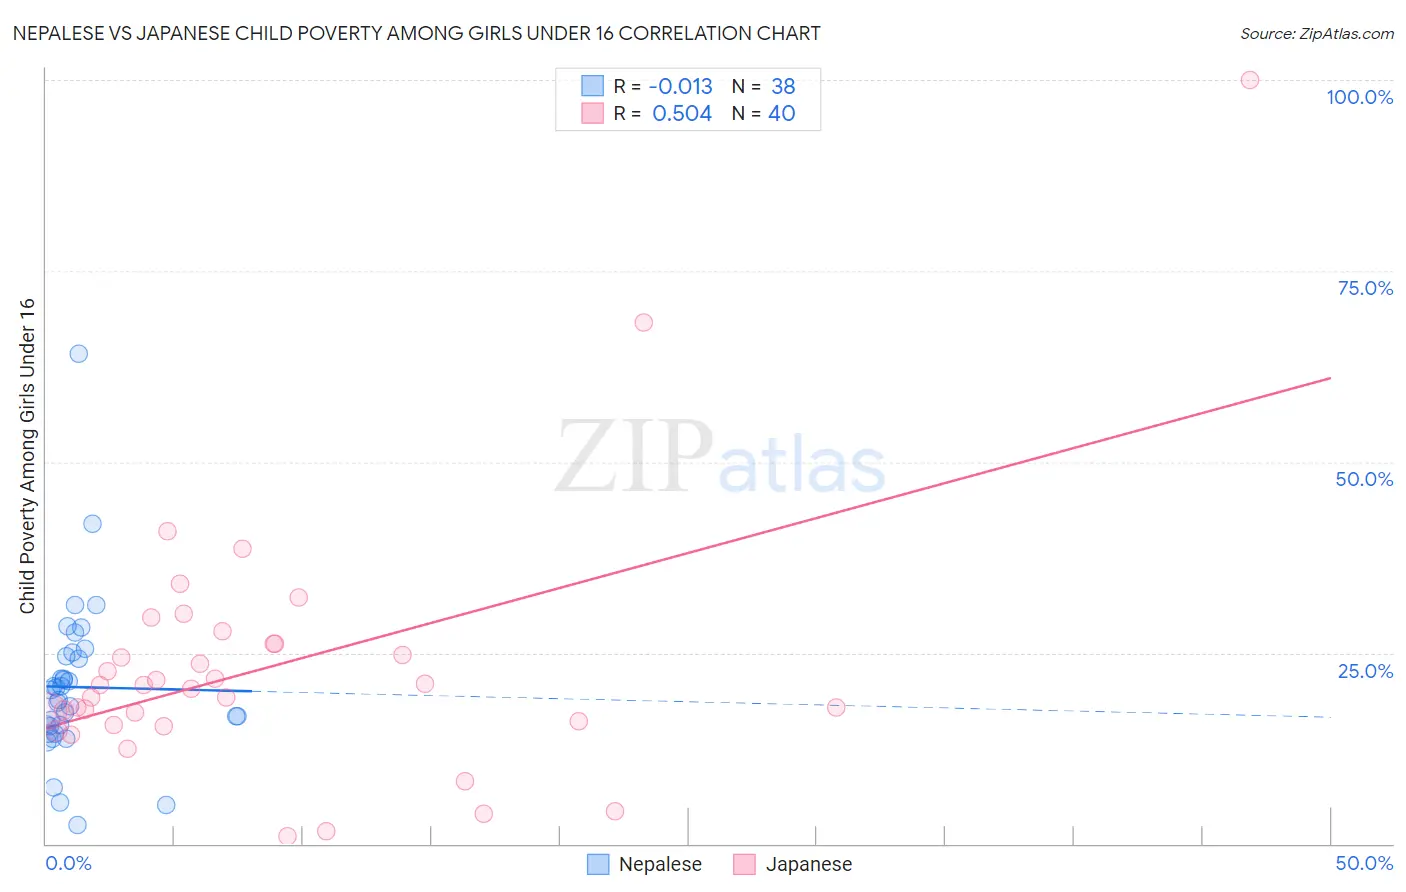 Nepalese vs Japanese Child Poverty Among Girls Under 16